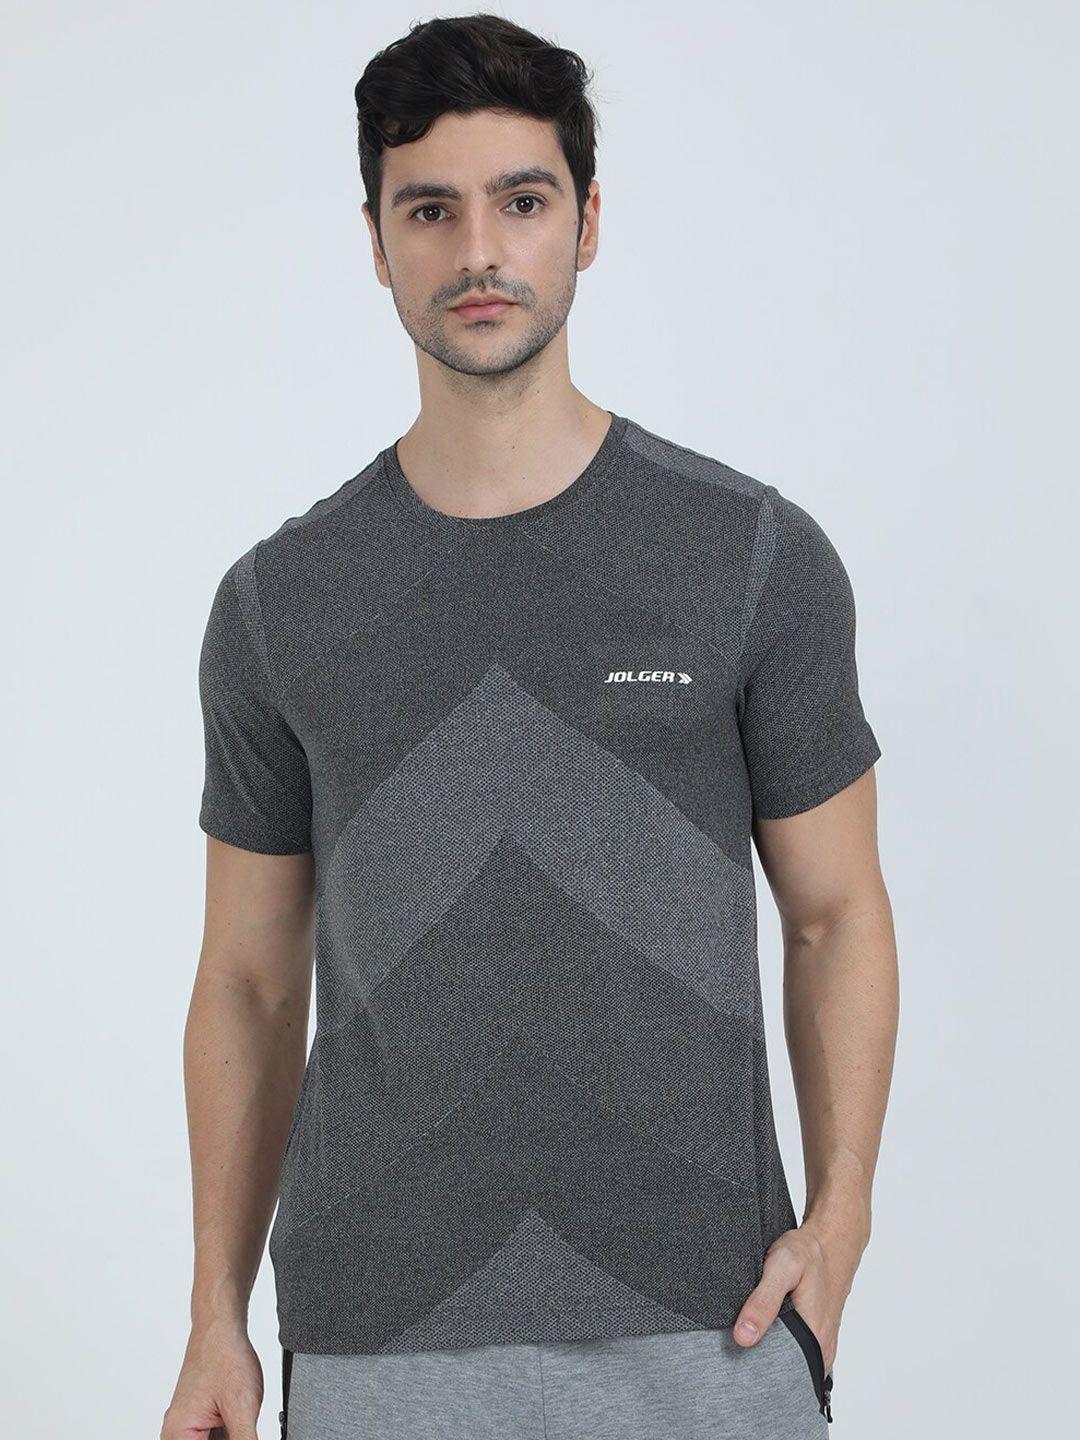 jolger slim fit geometric printed rapid-dry breathable gym t-shirt